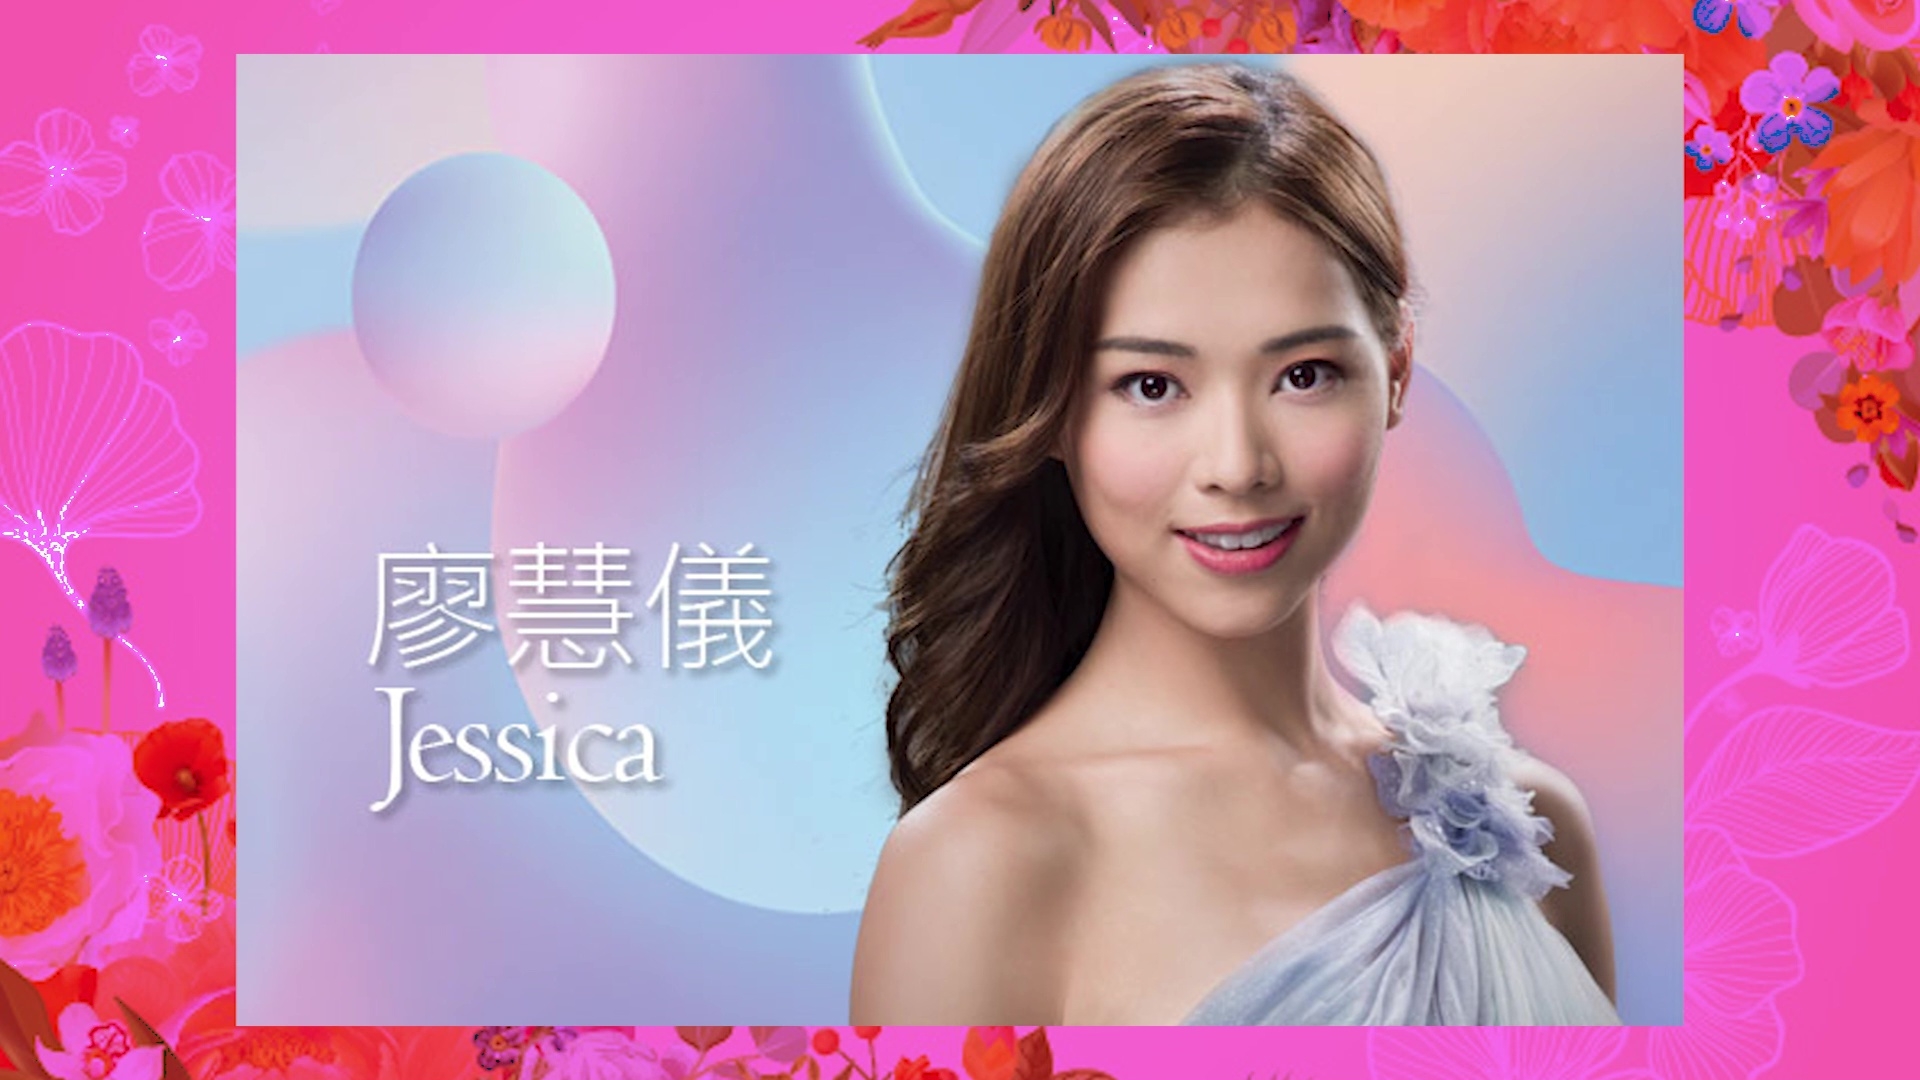 Jessica喺《2020香港小姐競選》躋身十強。